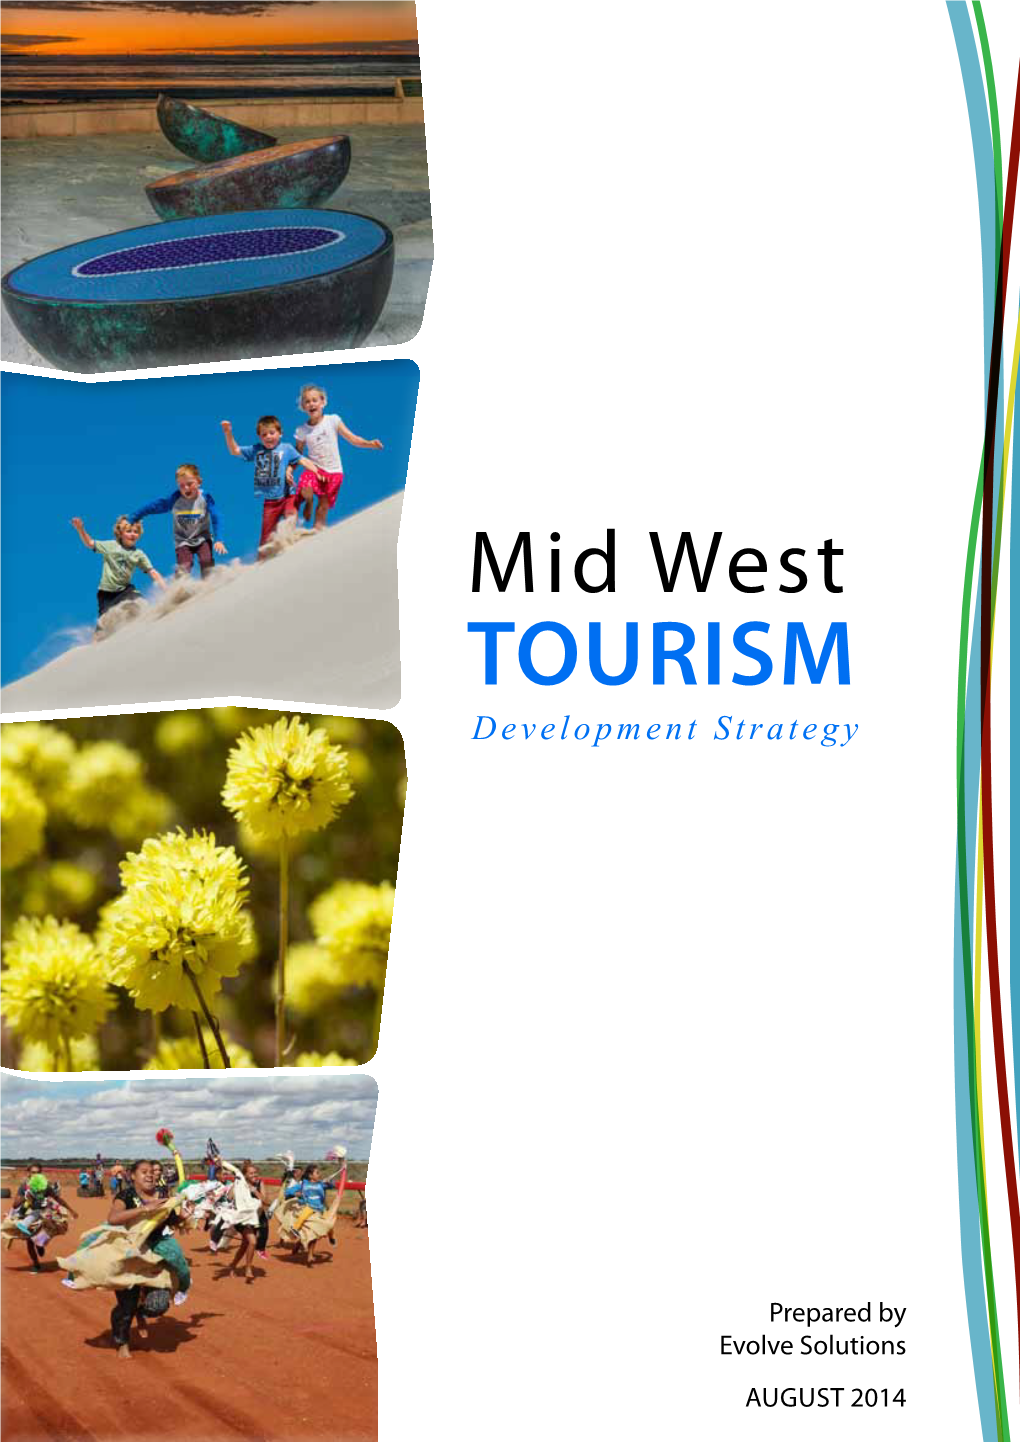 Mid West TOURISM Development Strategy